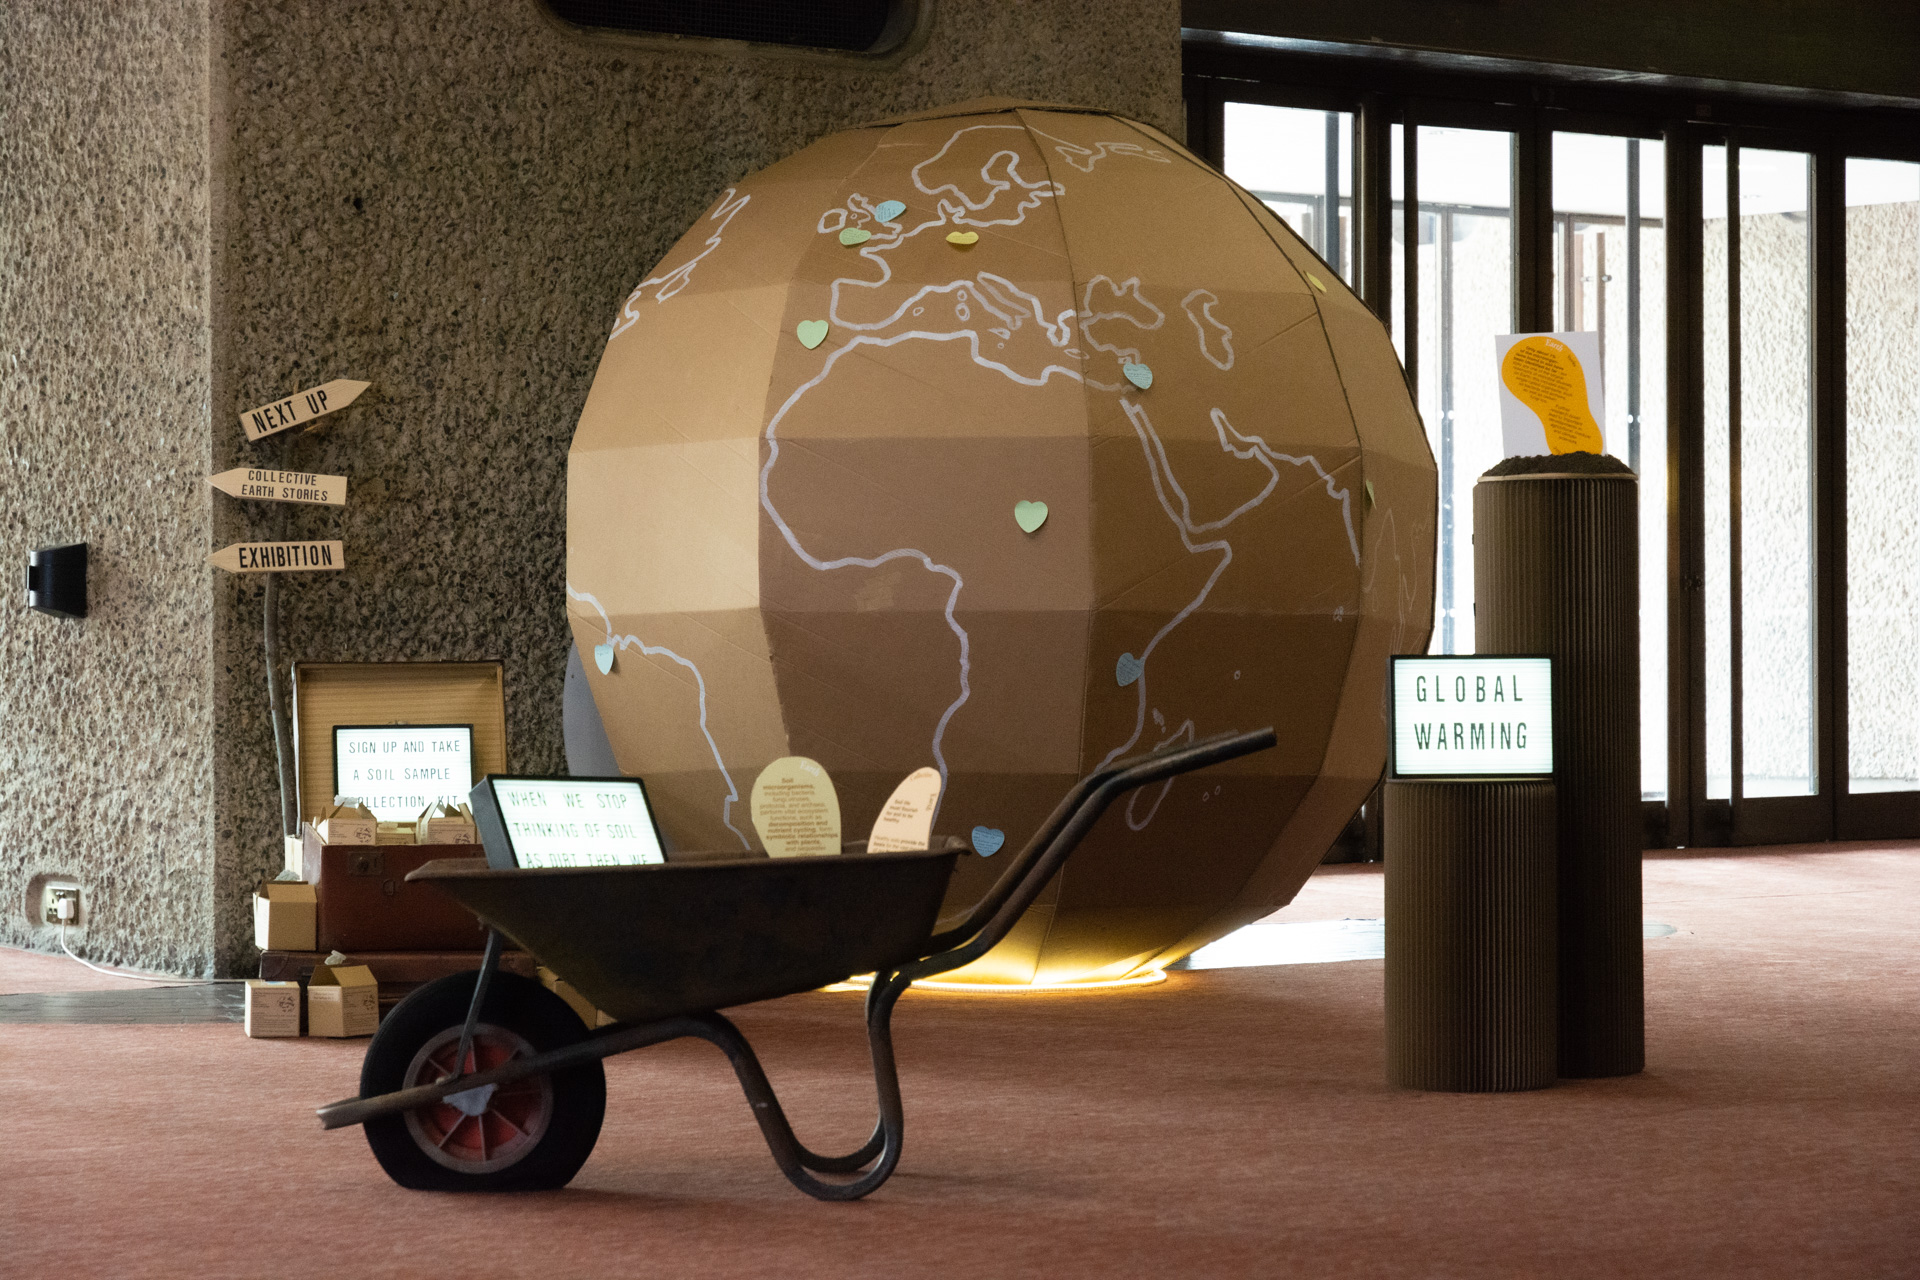 A wheelbarrow in front of a giant cardboard globe